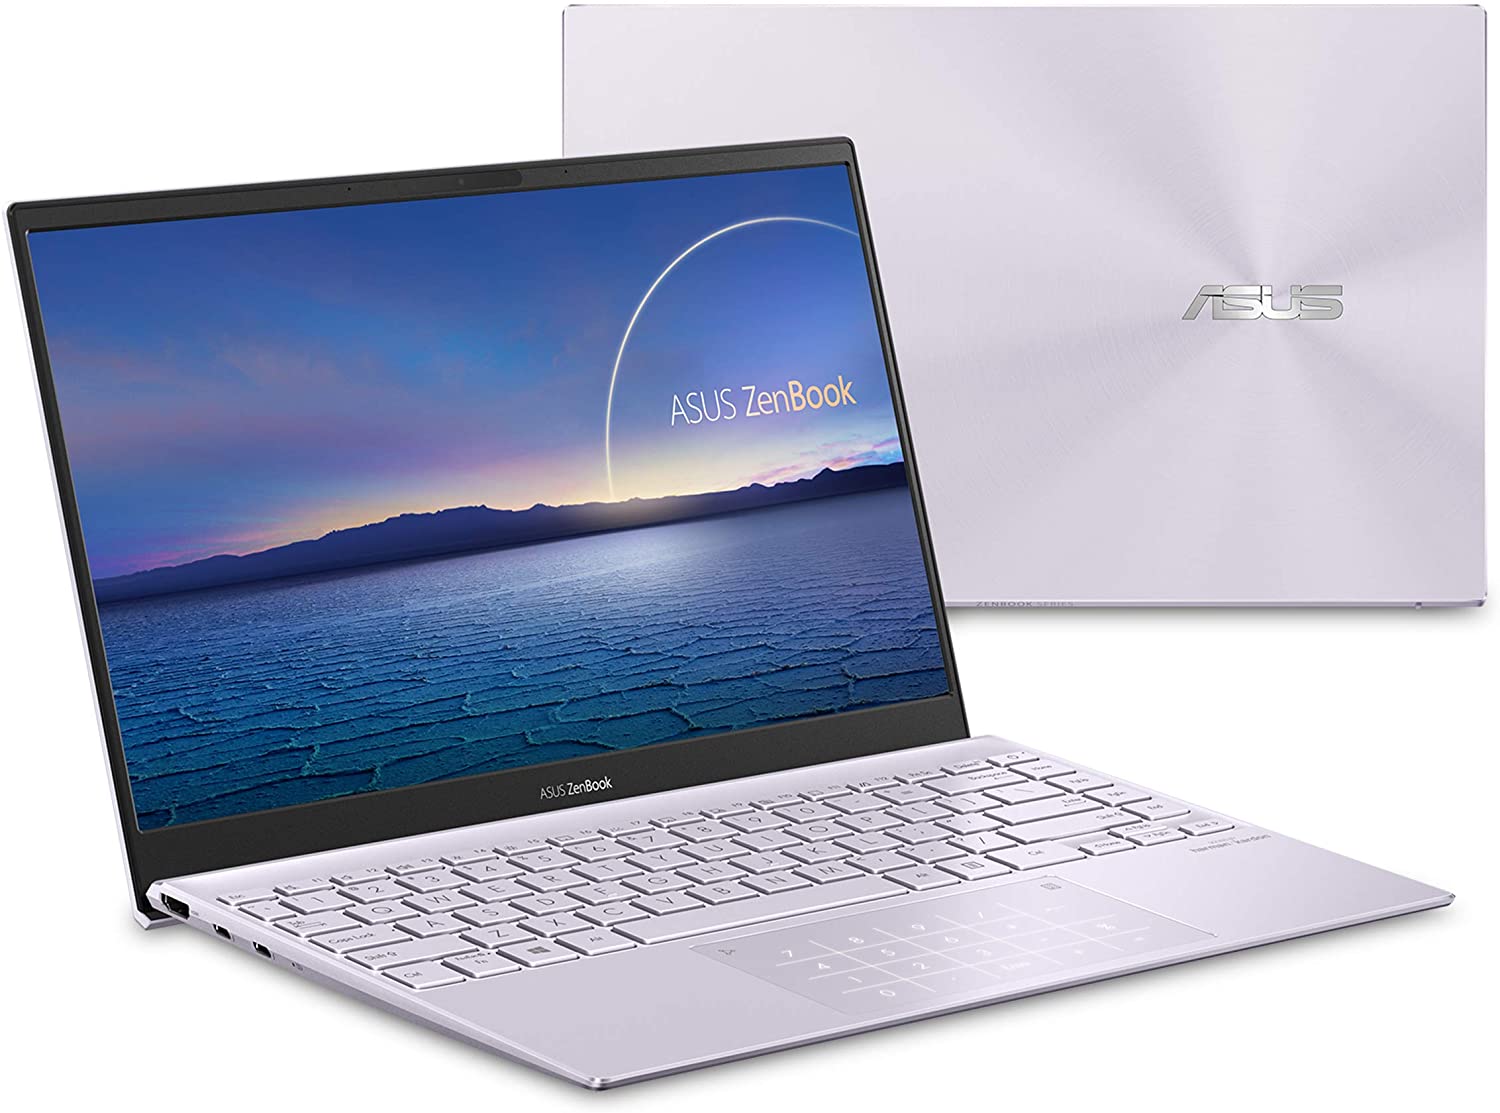 ASUS Laptop Cyber Monday Sale, Deals [year] - HUGE Discount 1